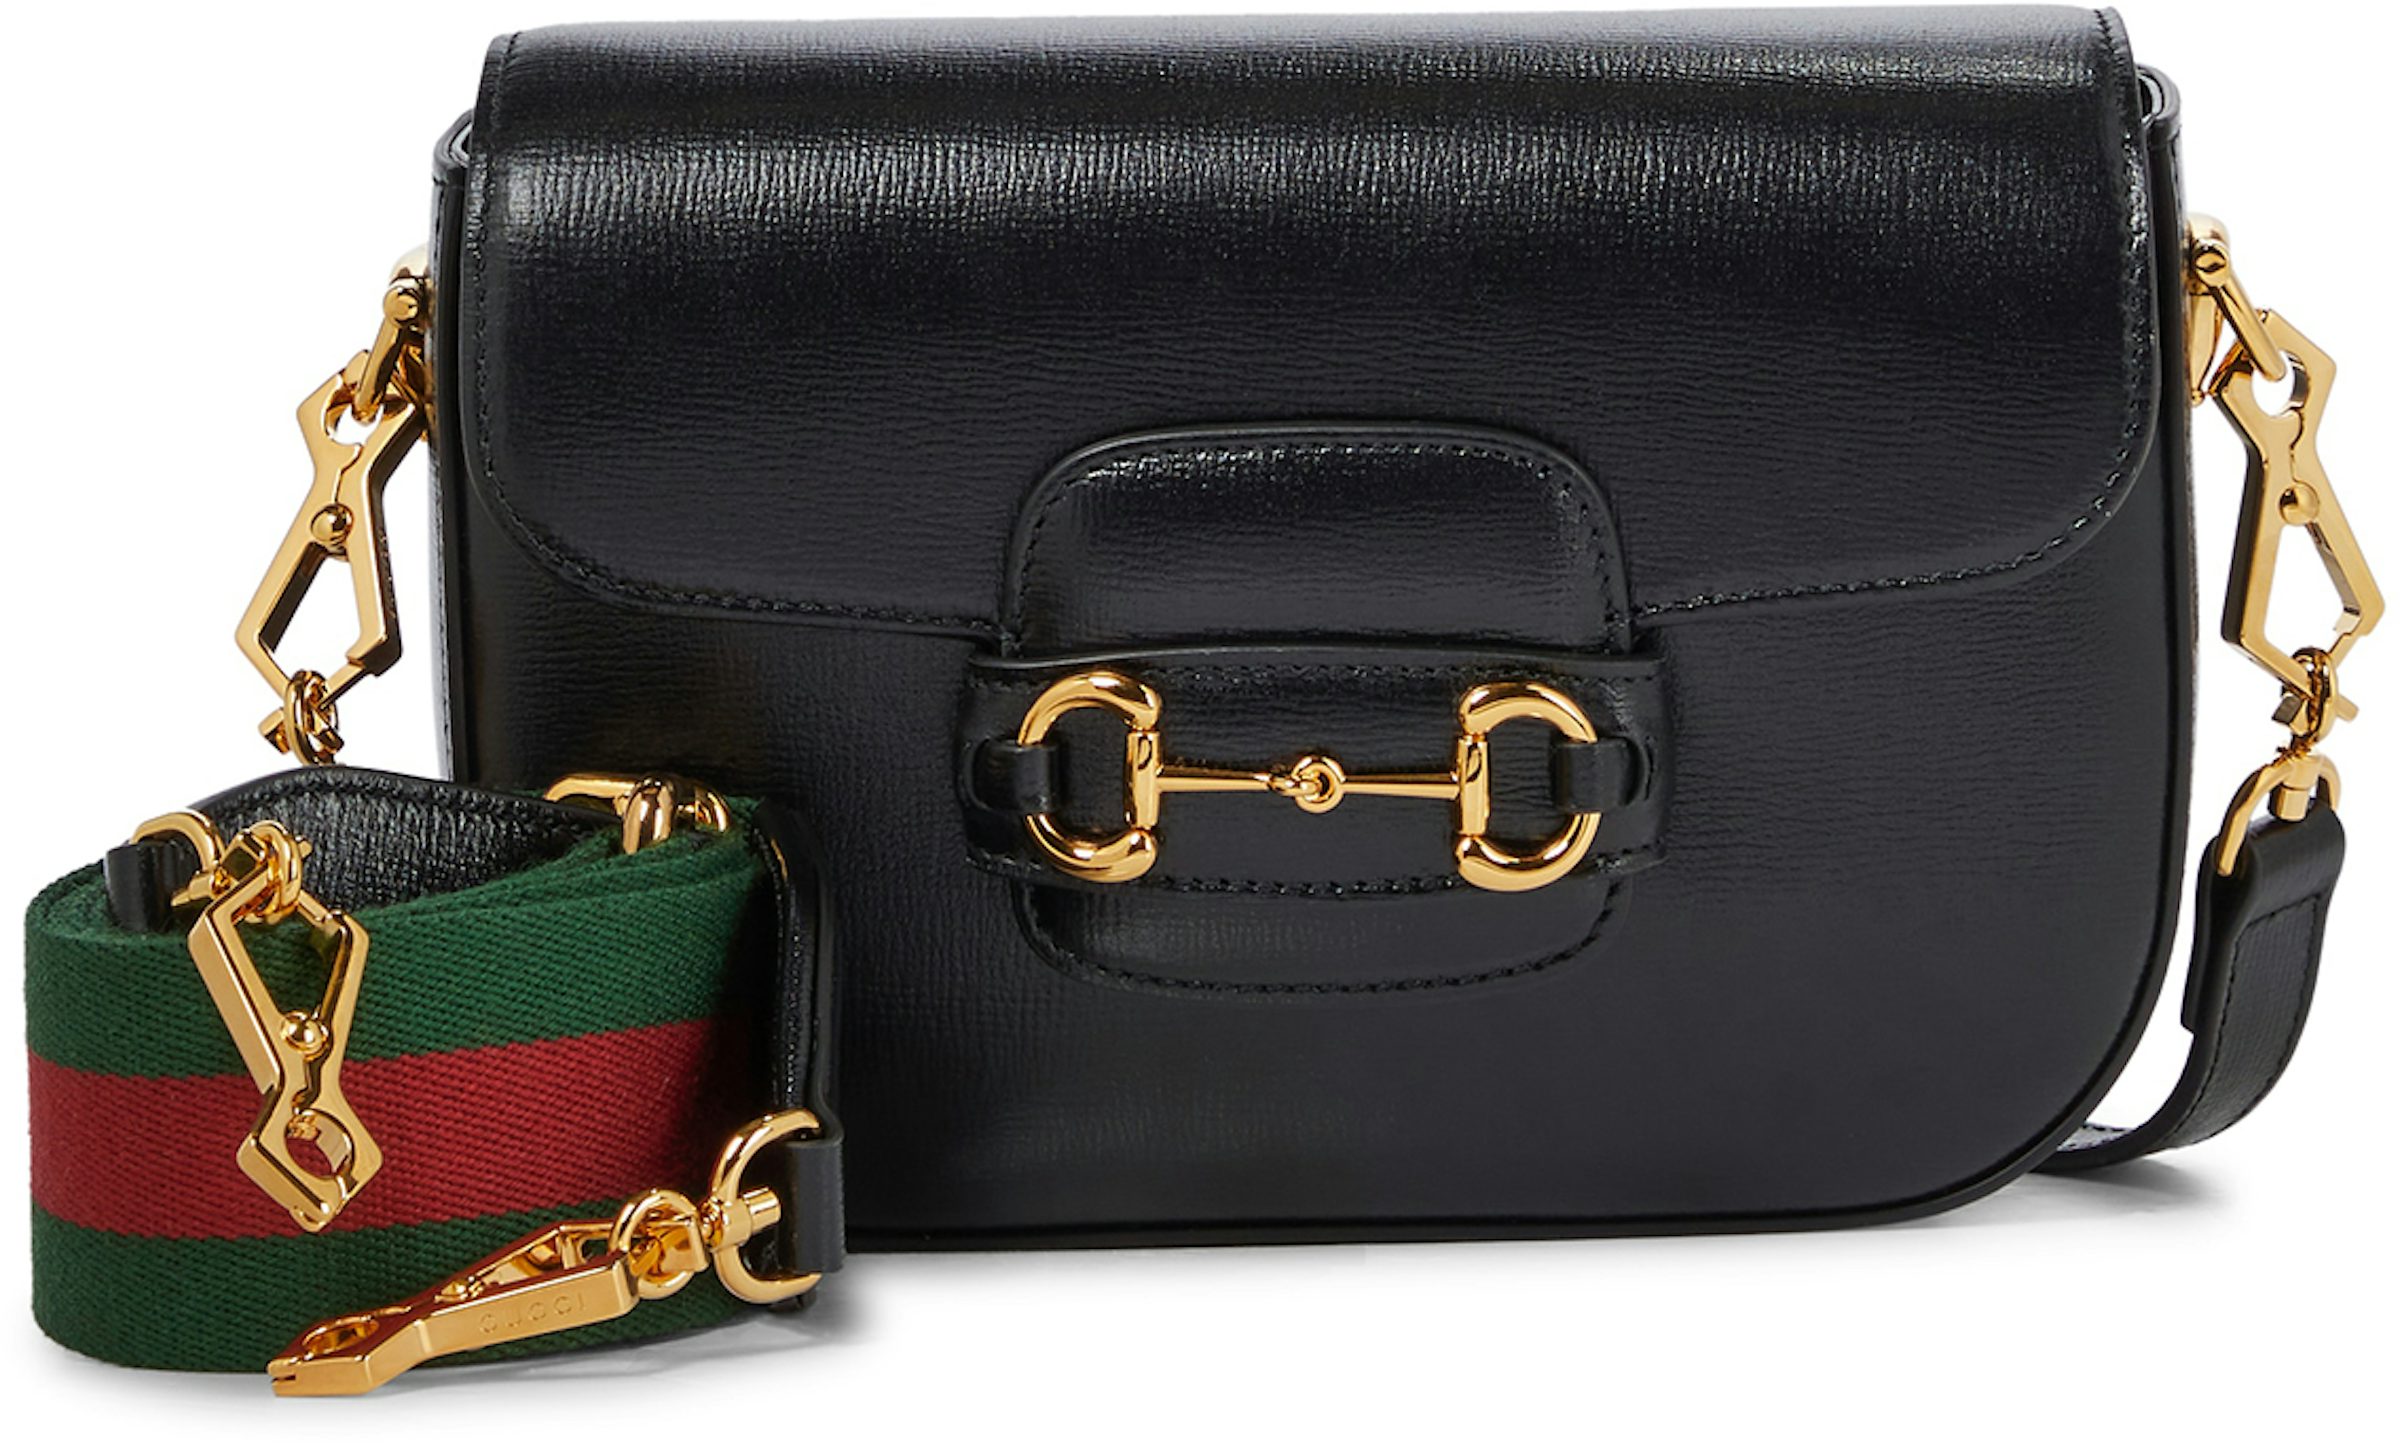 1955 Gucci Horsebit leather messenger bag